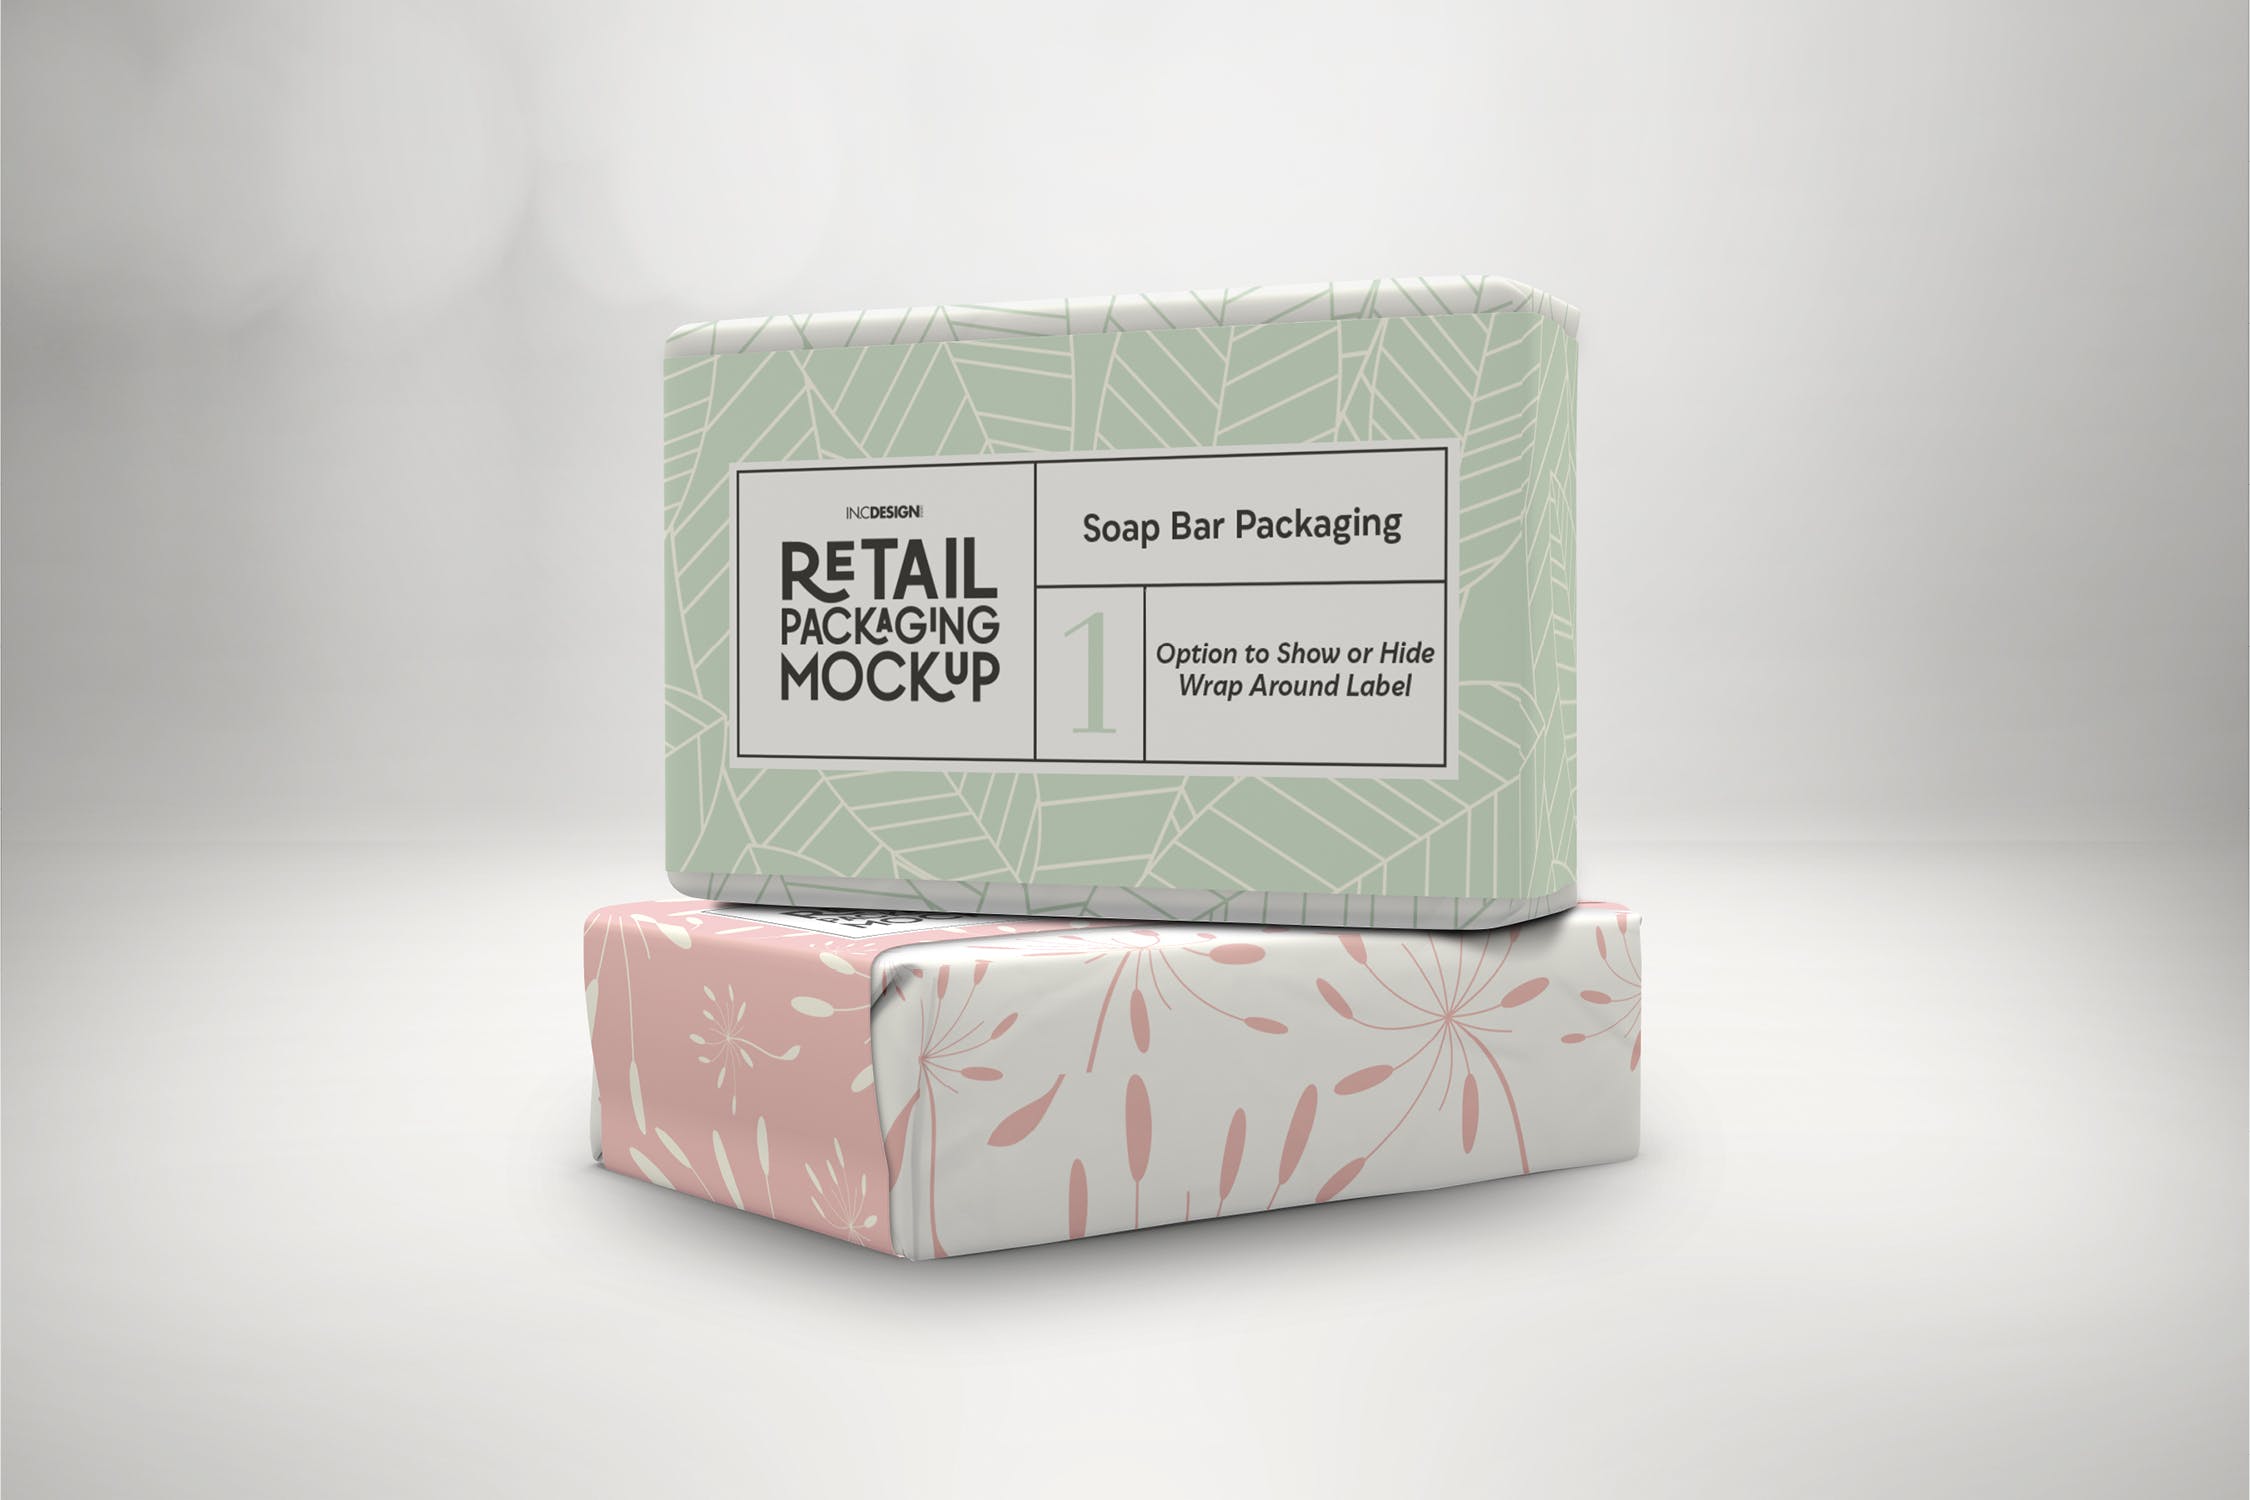 肥皂包装纸袋设计效果图普贤居精选 Retail Soap Bar Packaging Mockup插图(1)